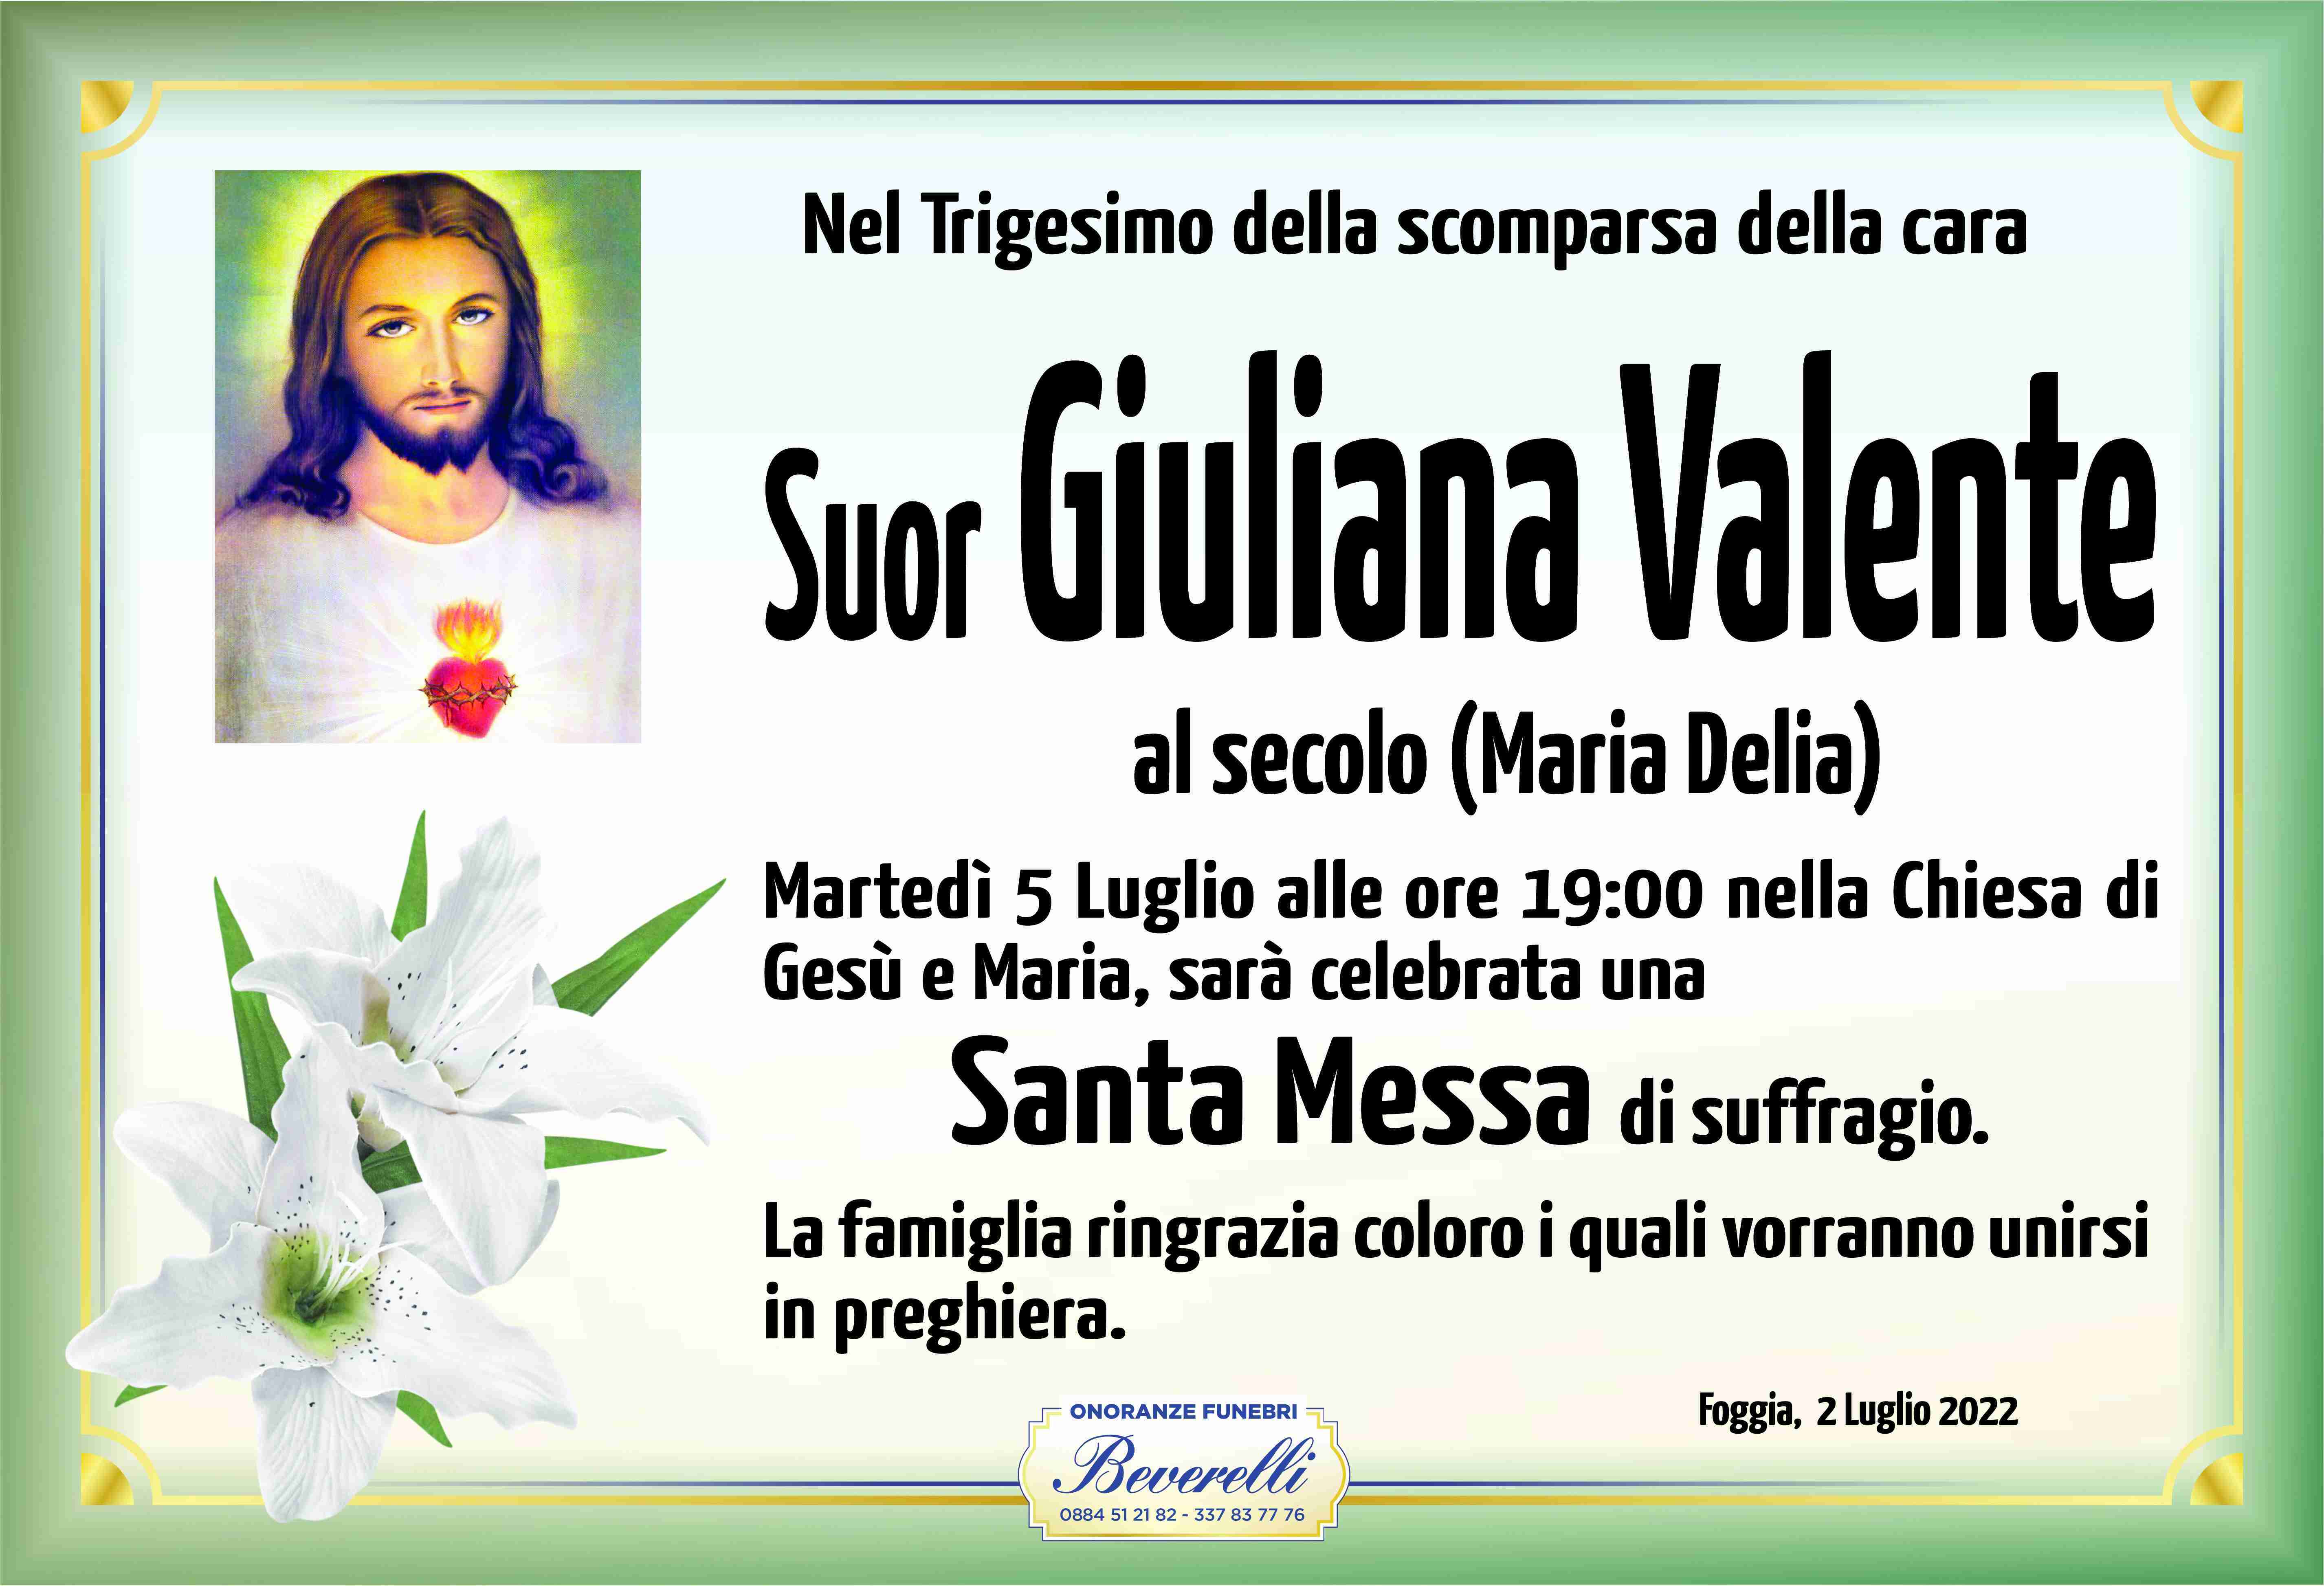 Suor Giuliana Valente